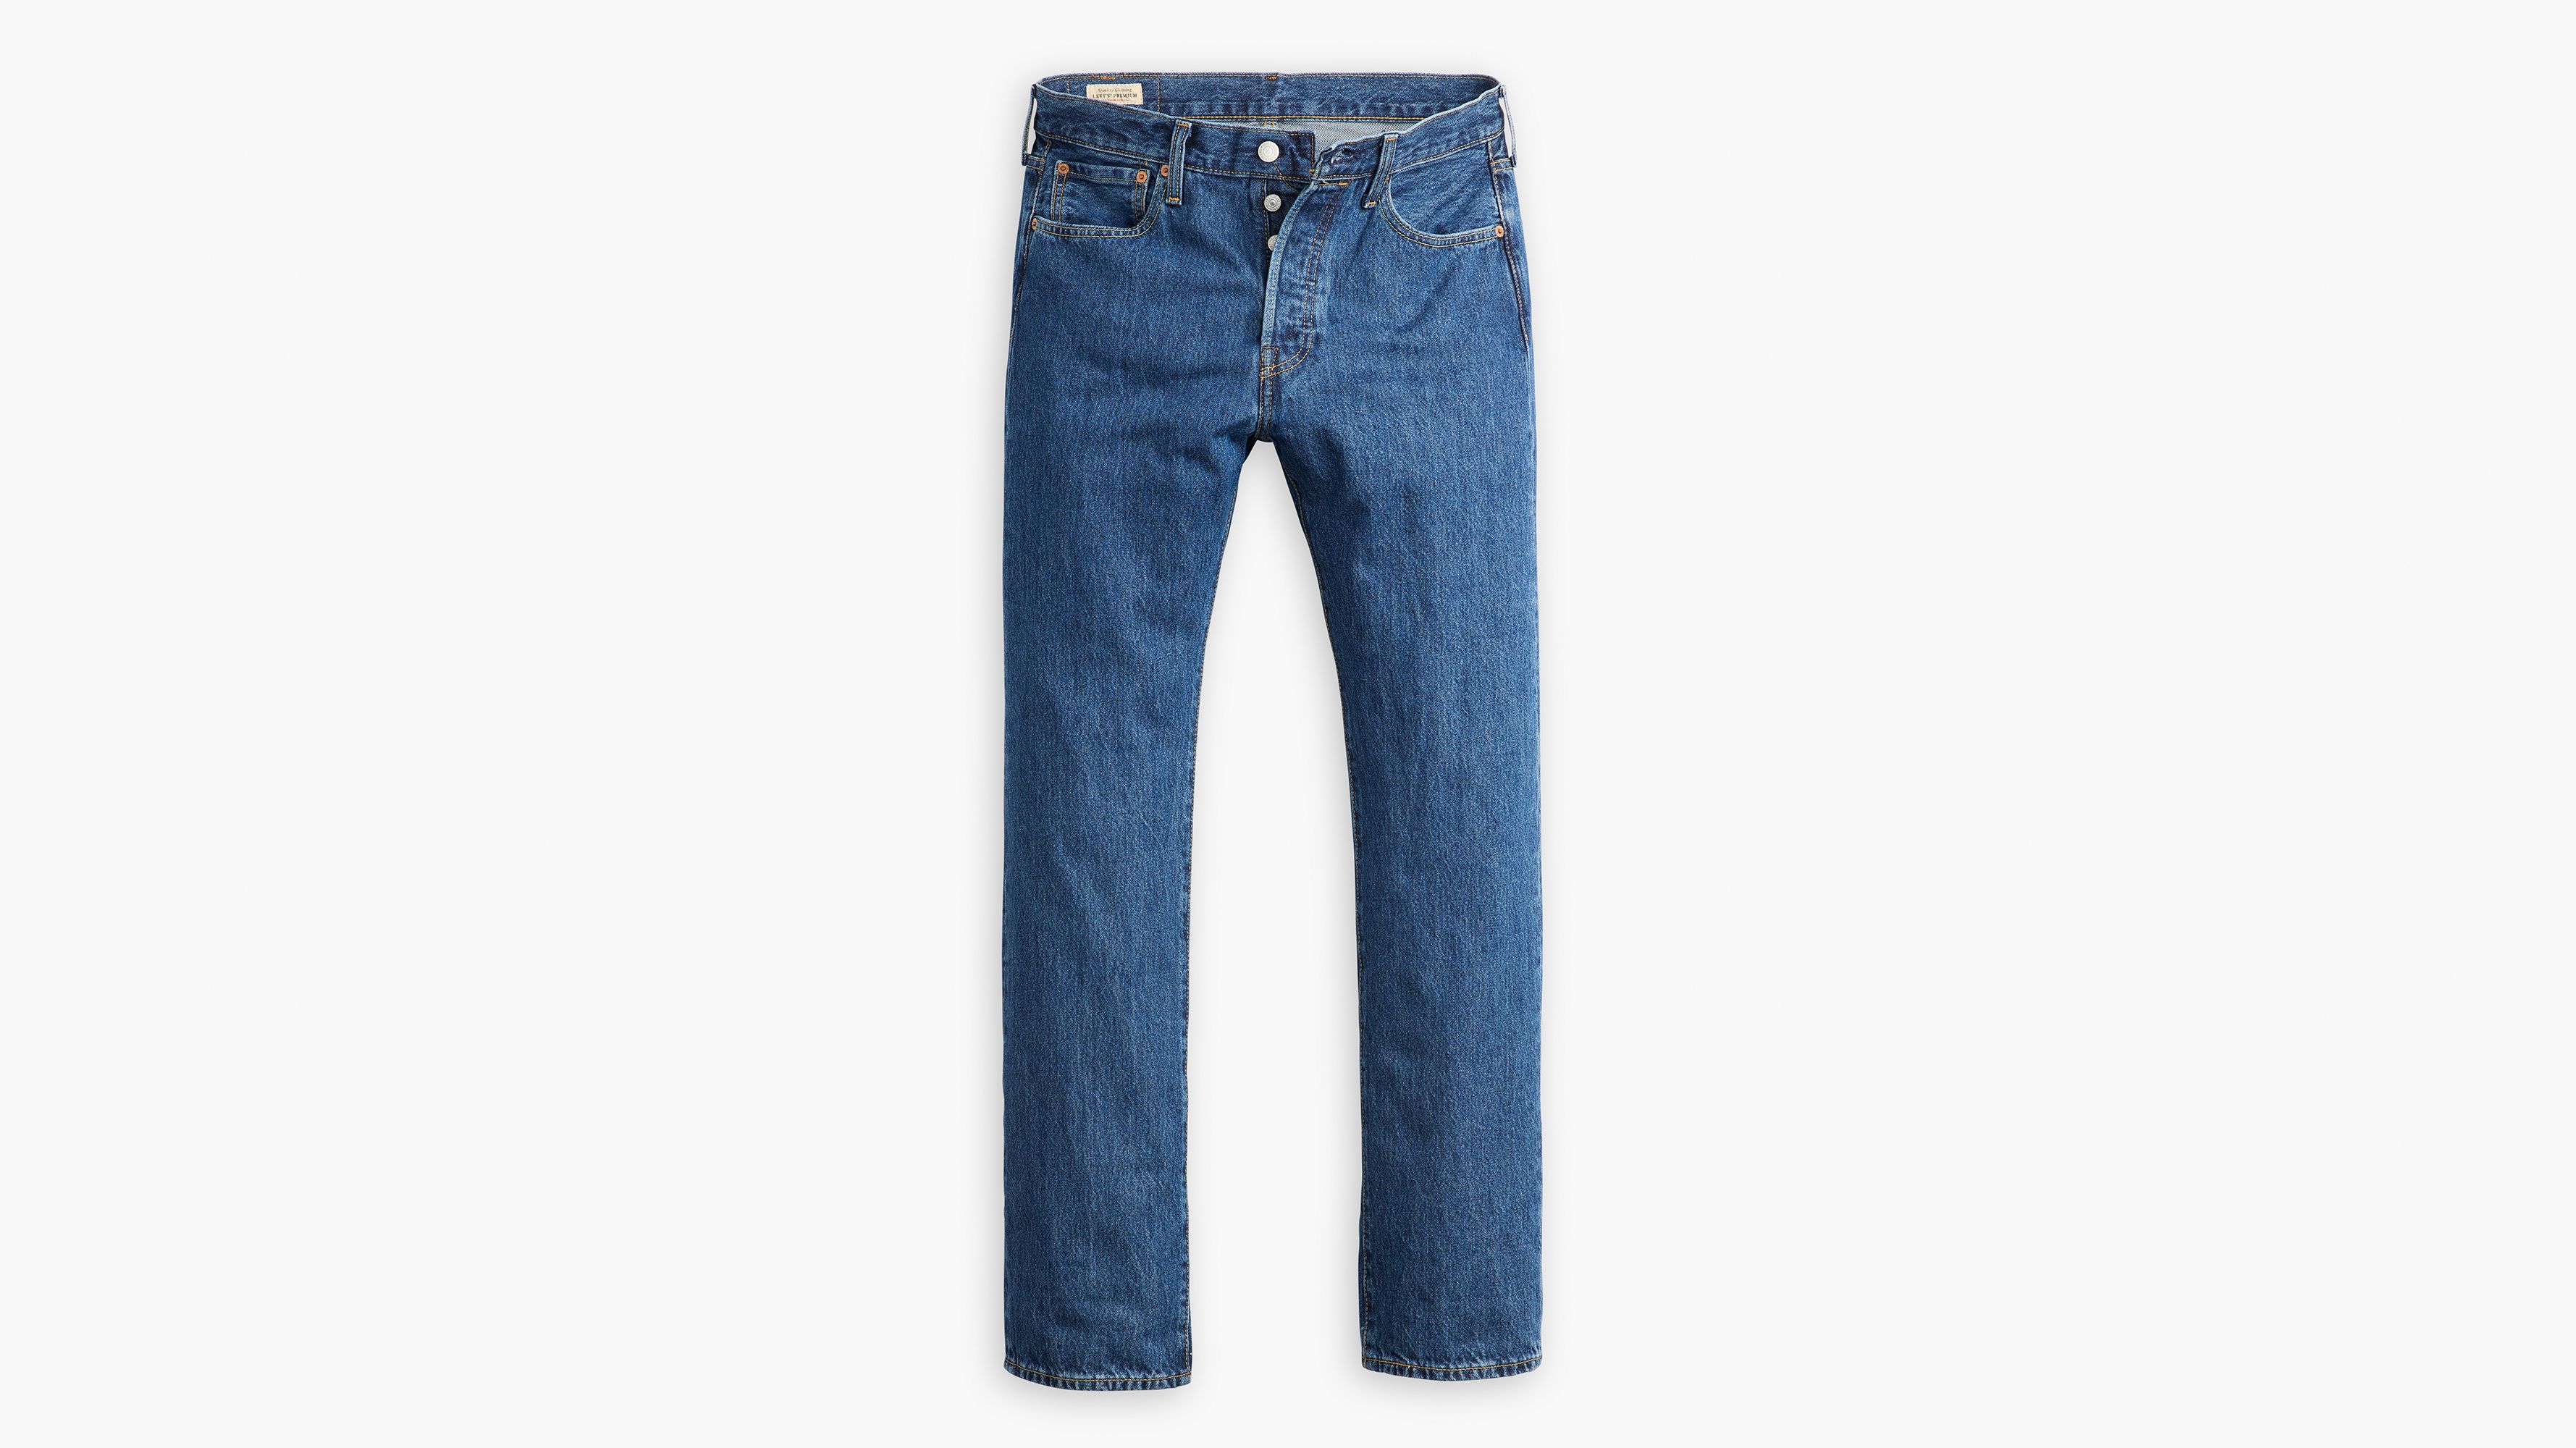 501® Original Fit Selvedge Men's Jeans - Light Wash